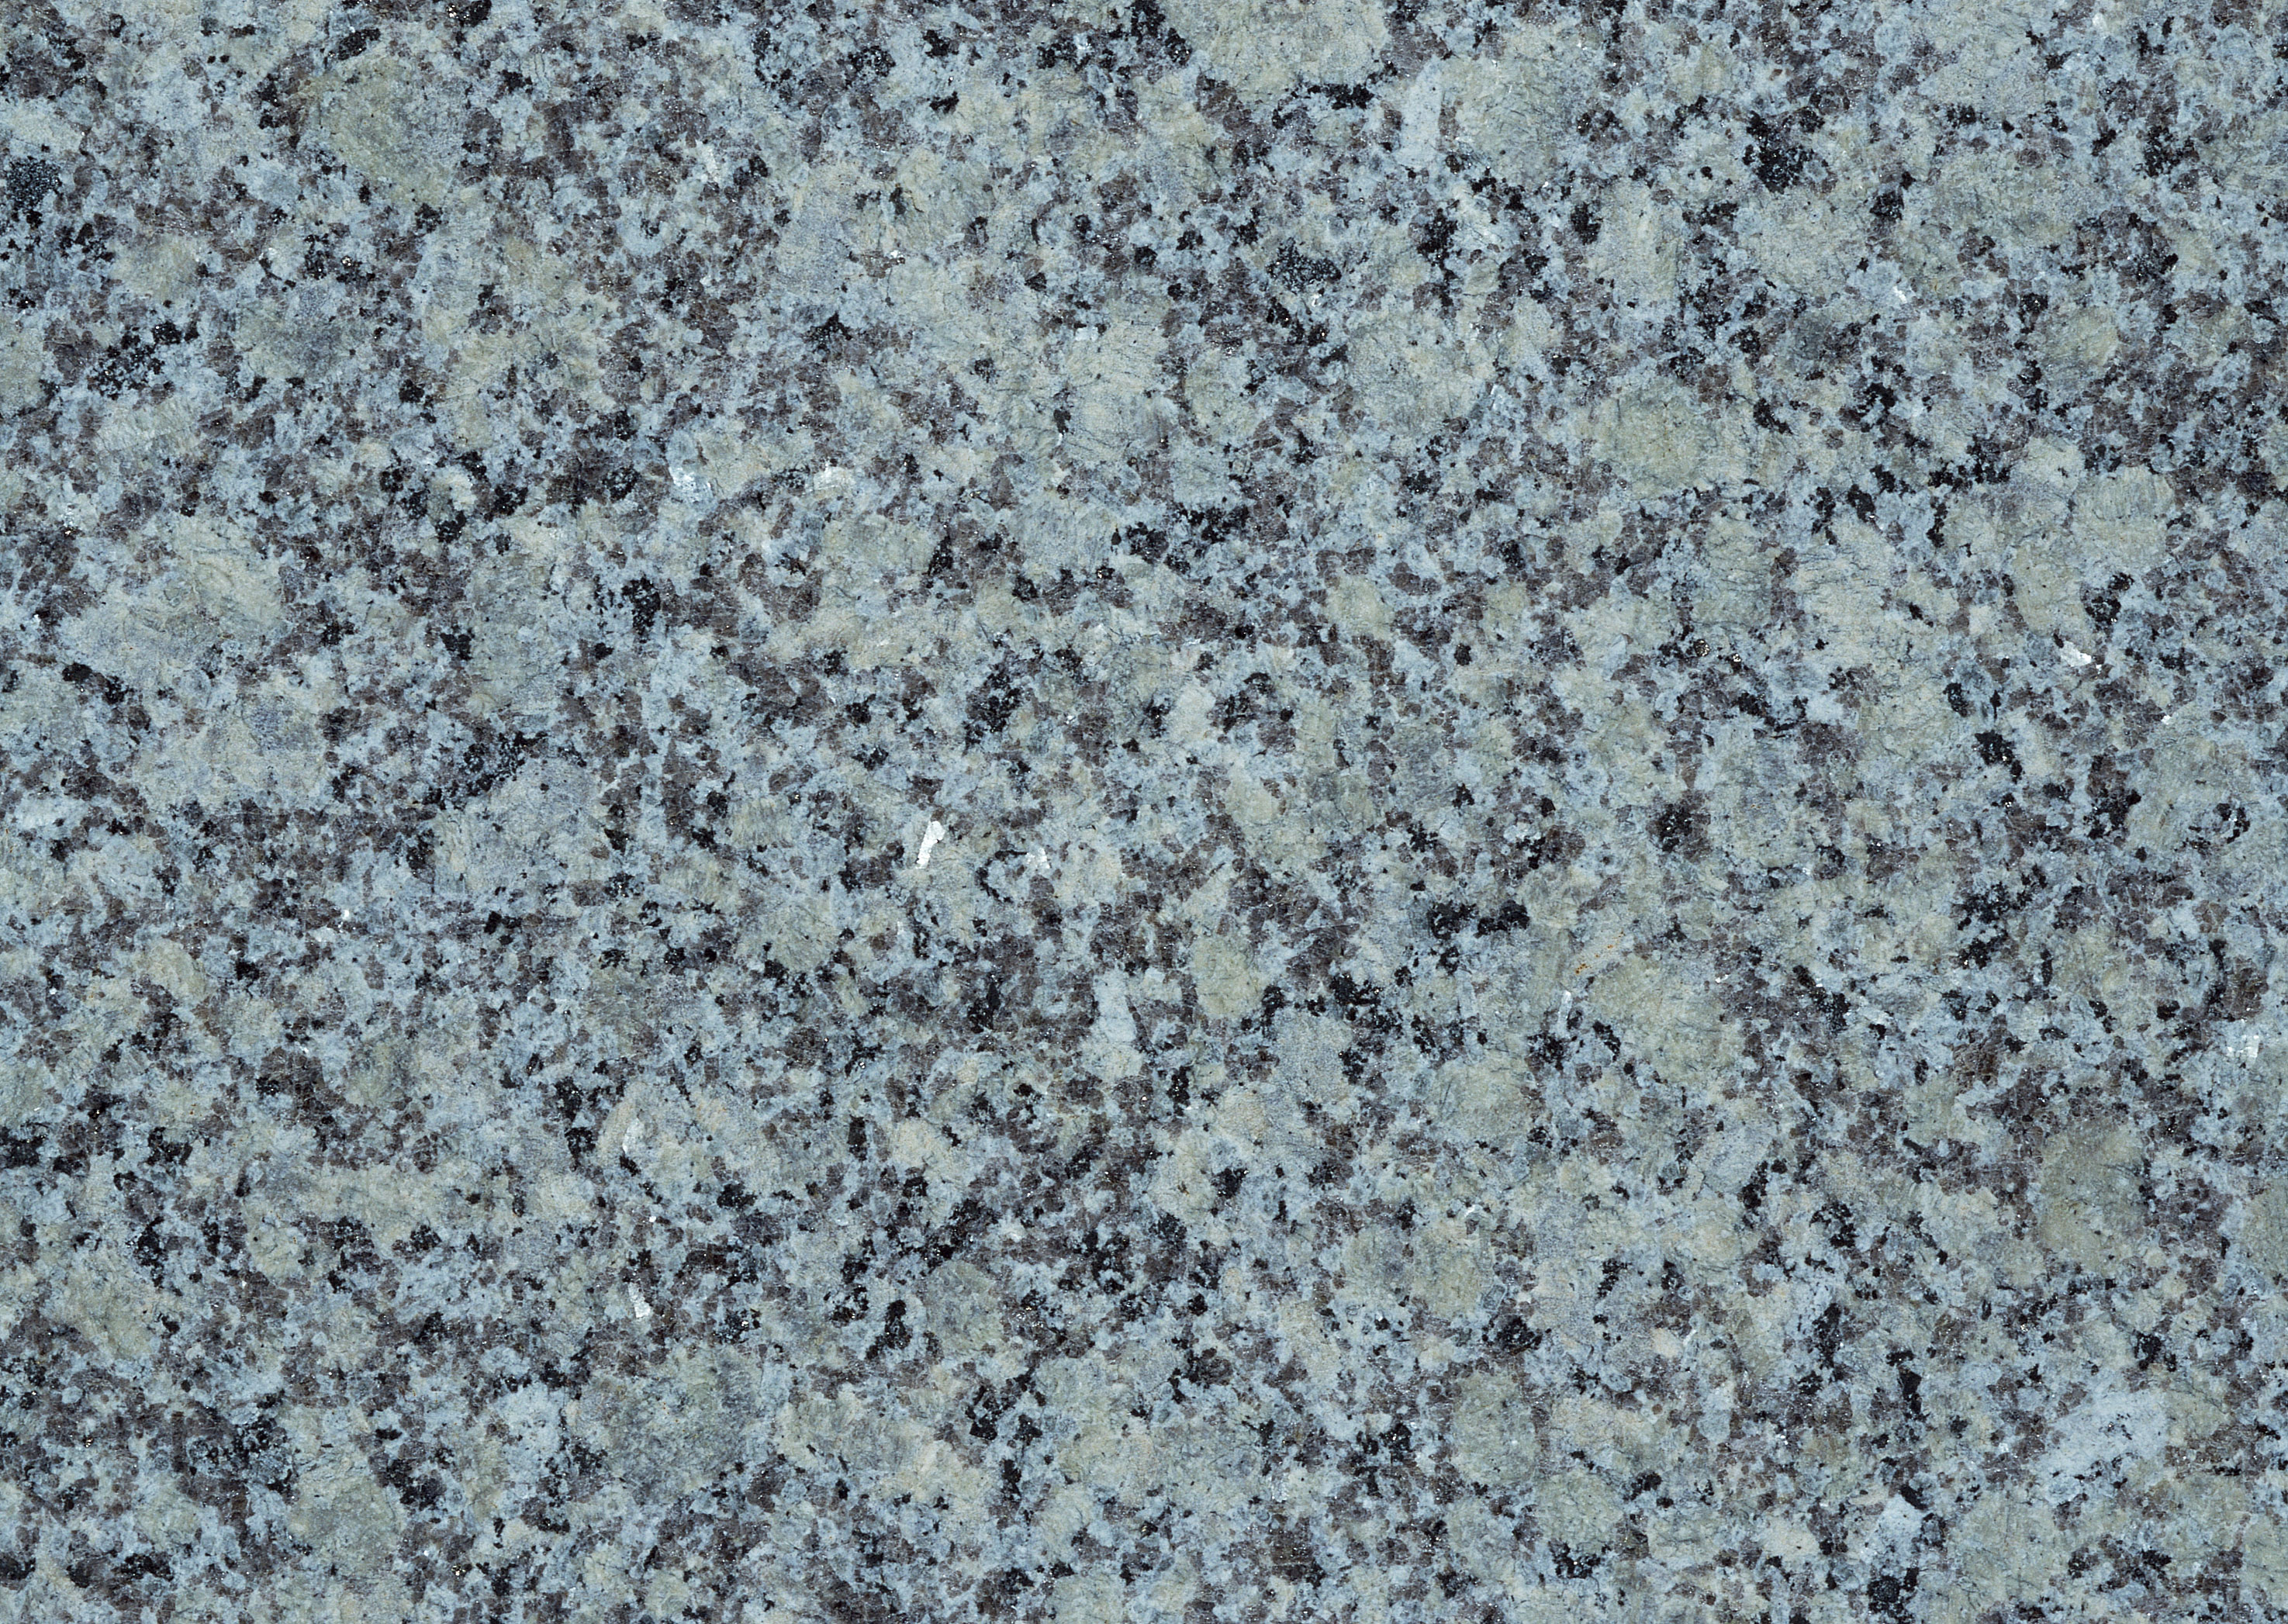 Granite stone texture background image